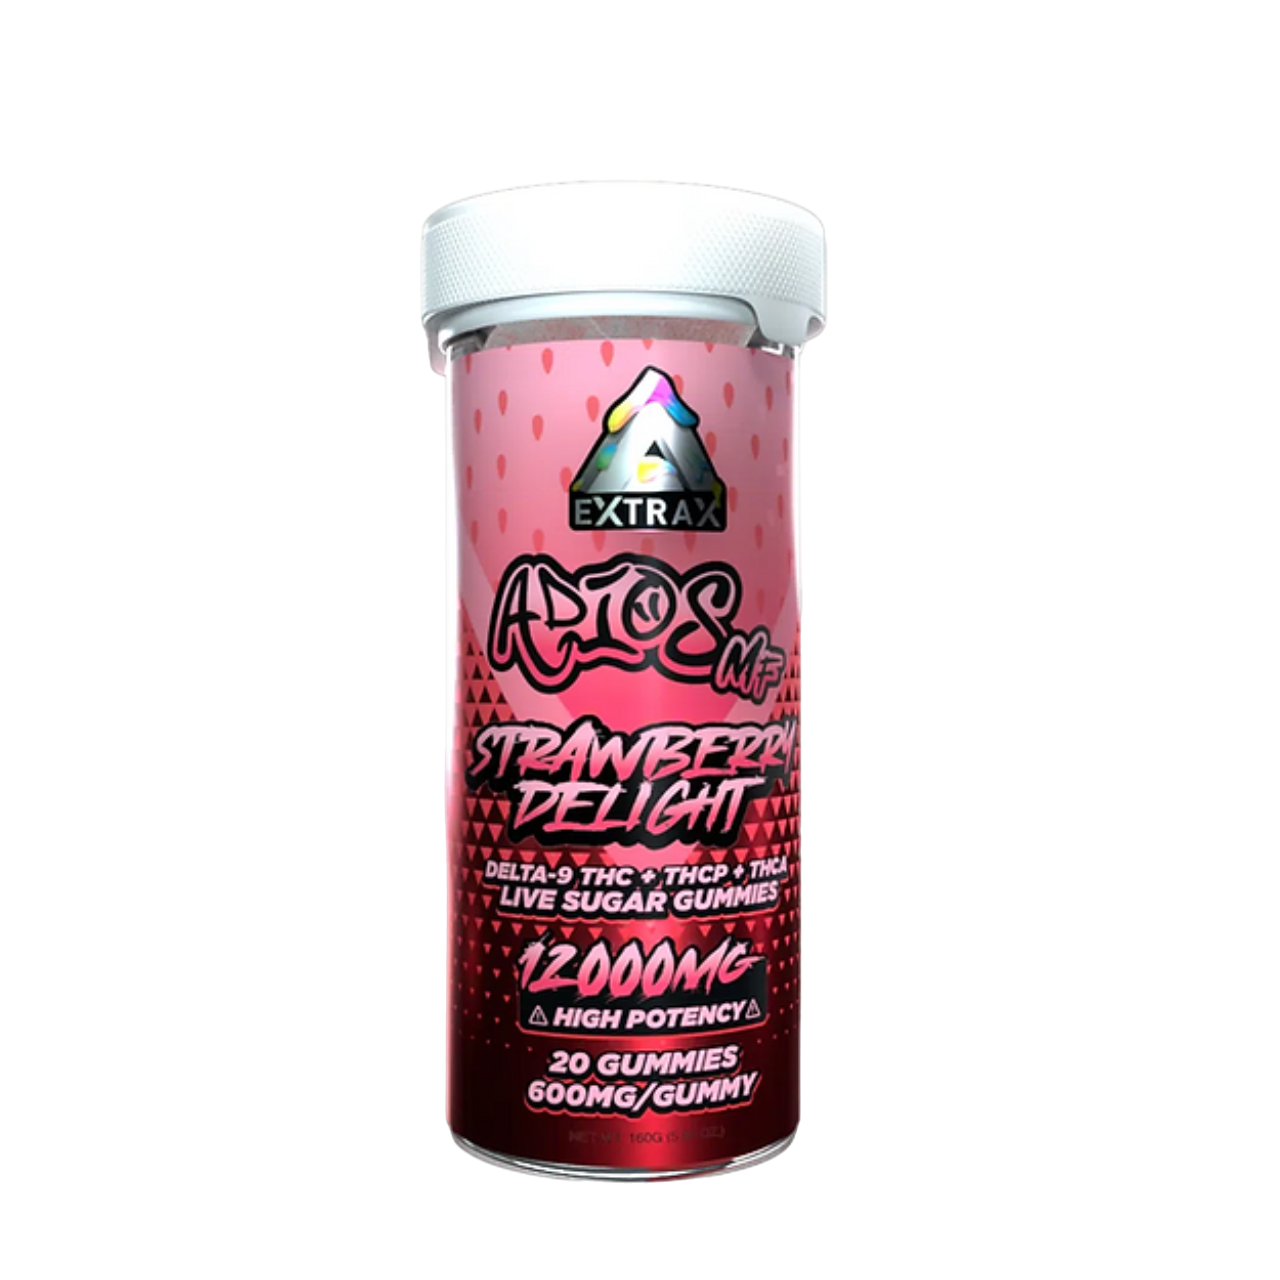 Delta Extrax Adios MF D9/THC/THC-P/THC-A Live Resin Sugar Gummies - 12000MG